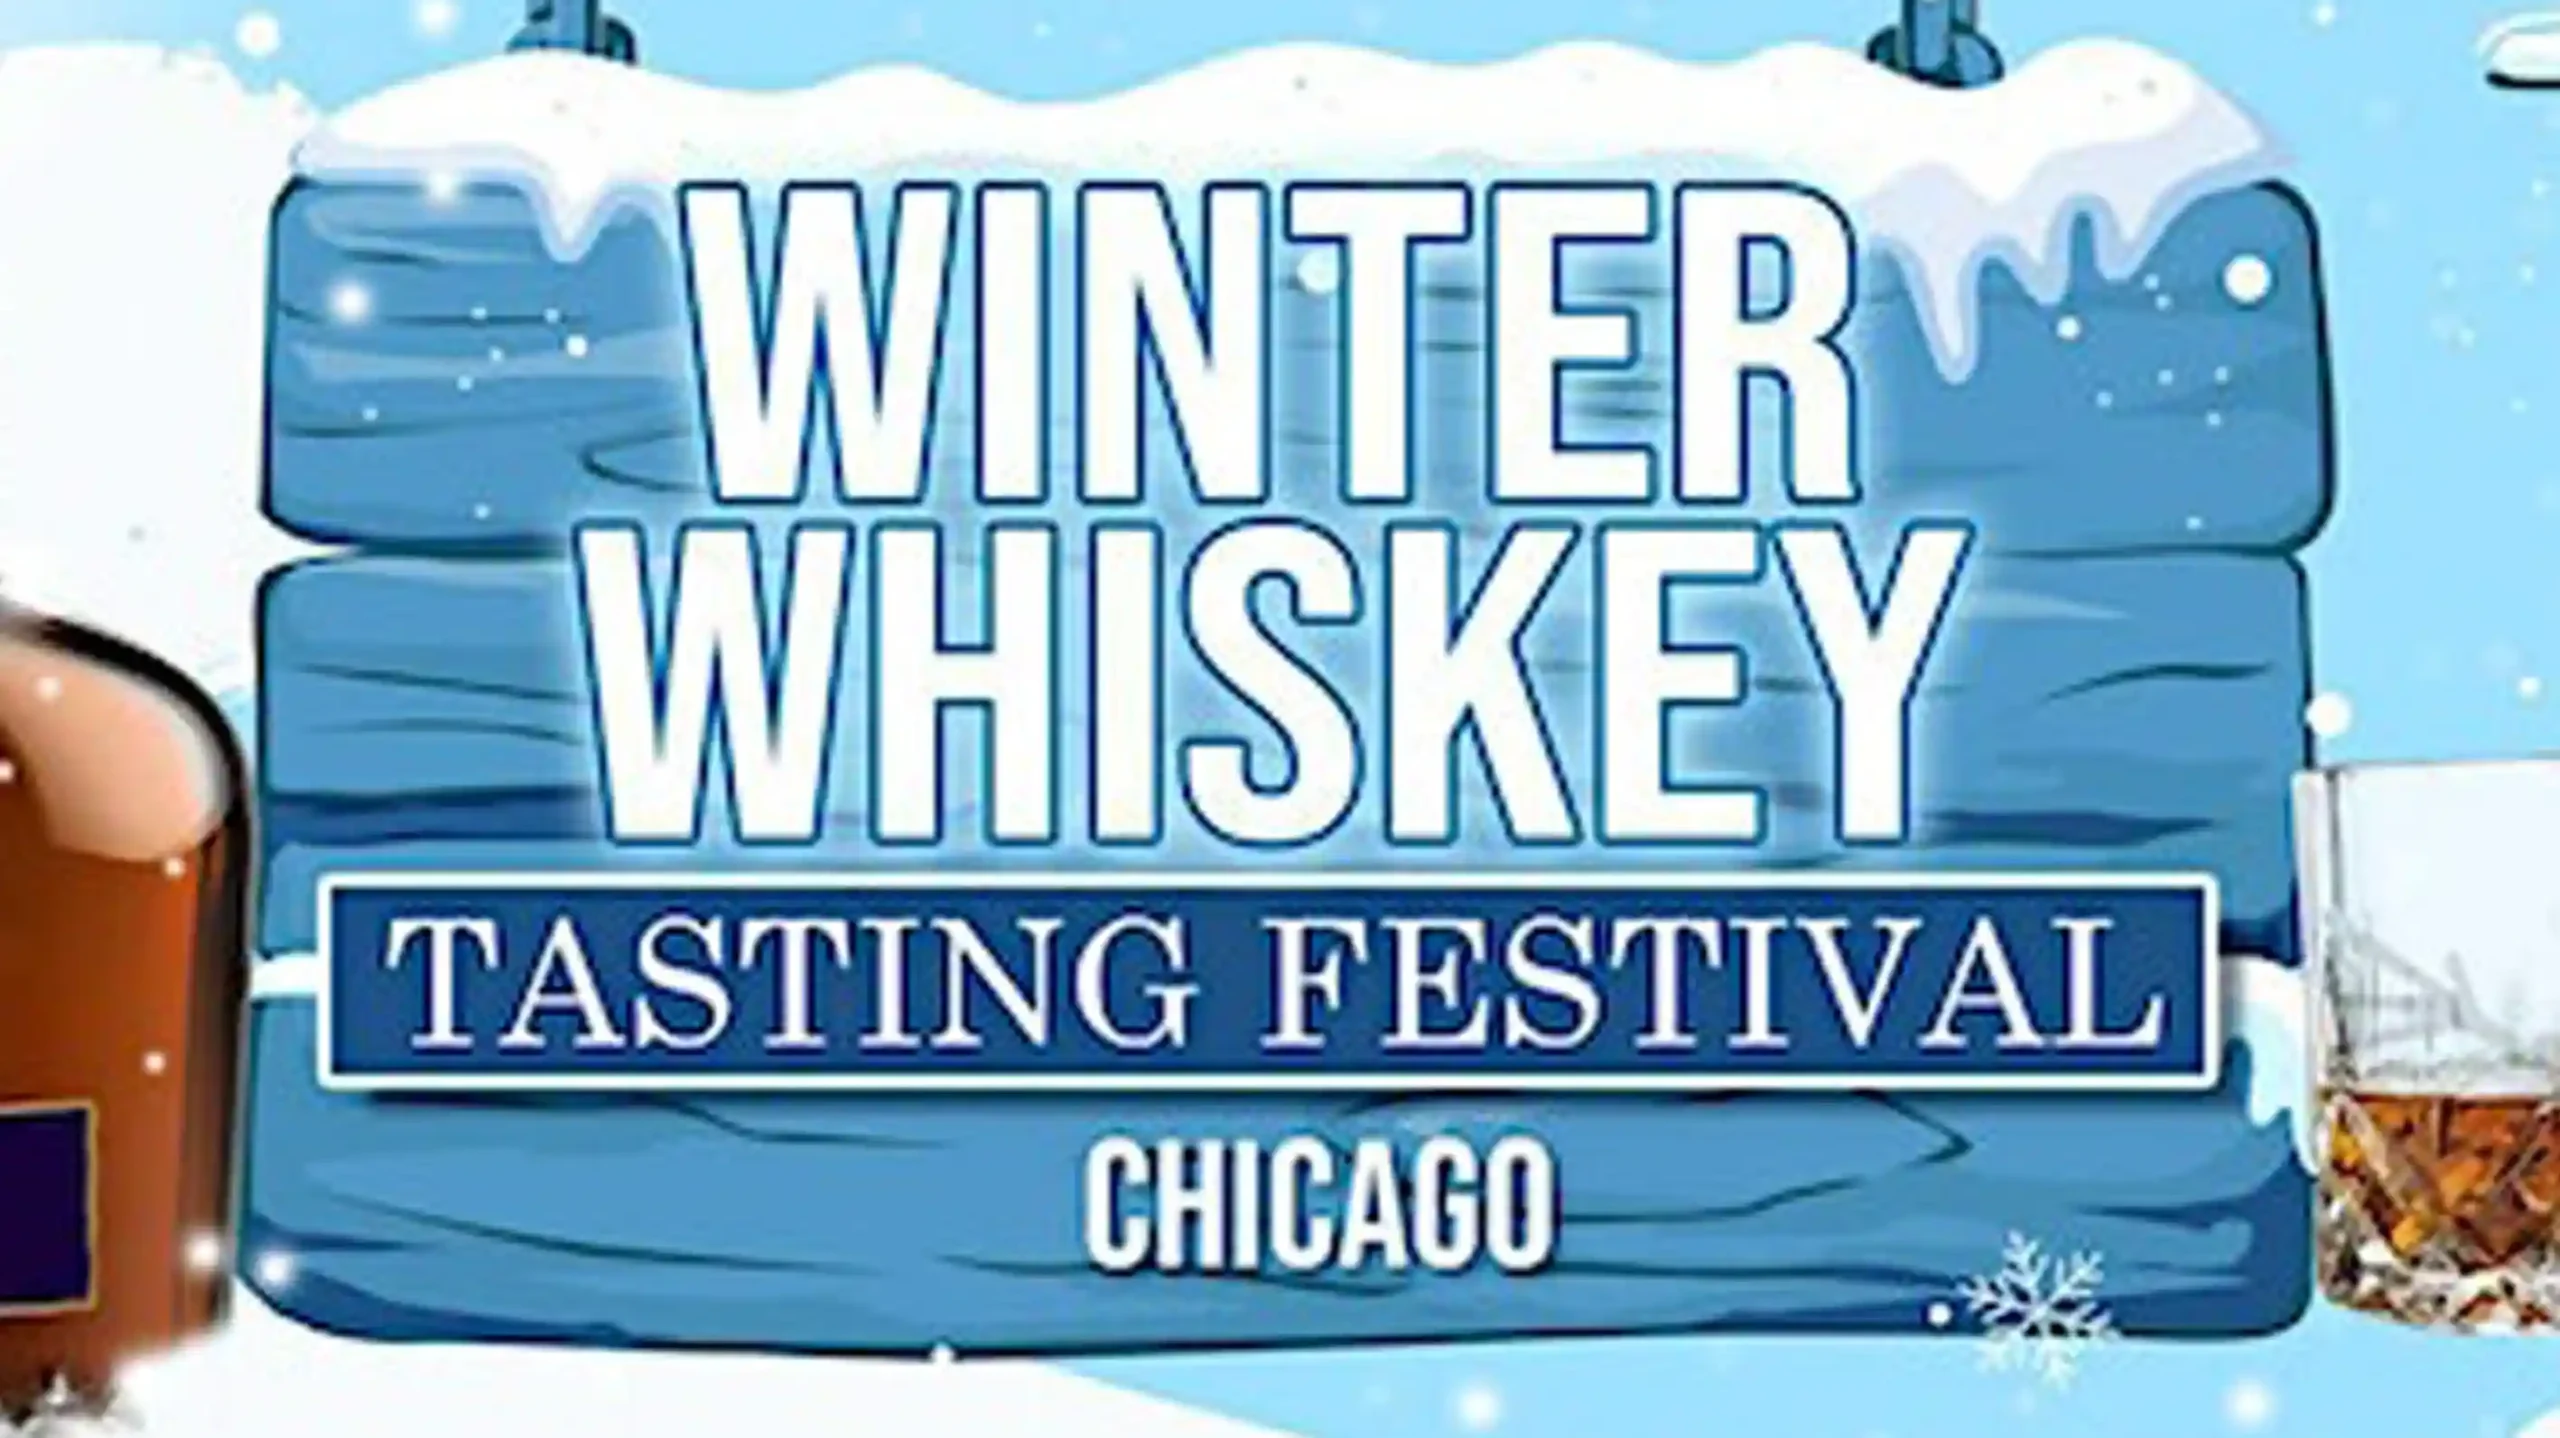 Chicago Winter Whiskey Tasting Festival January 27th